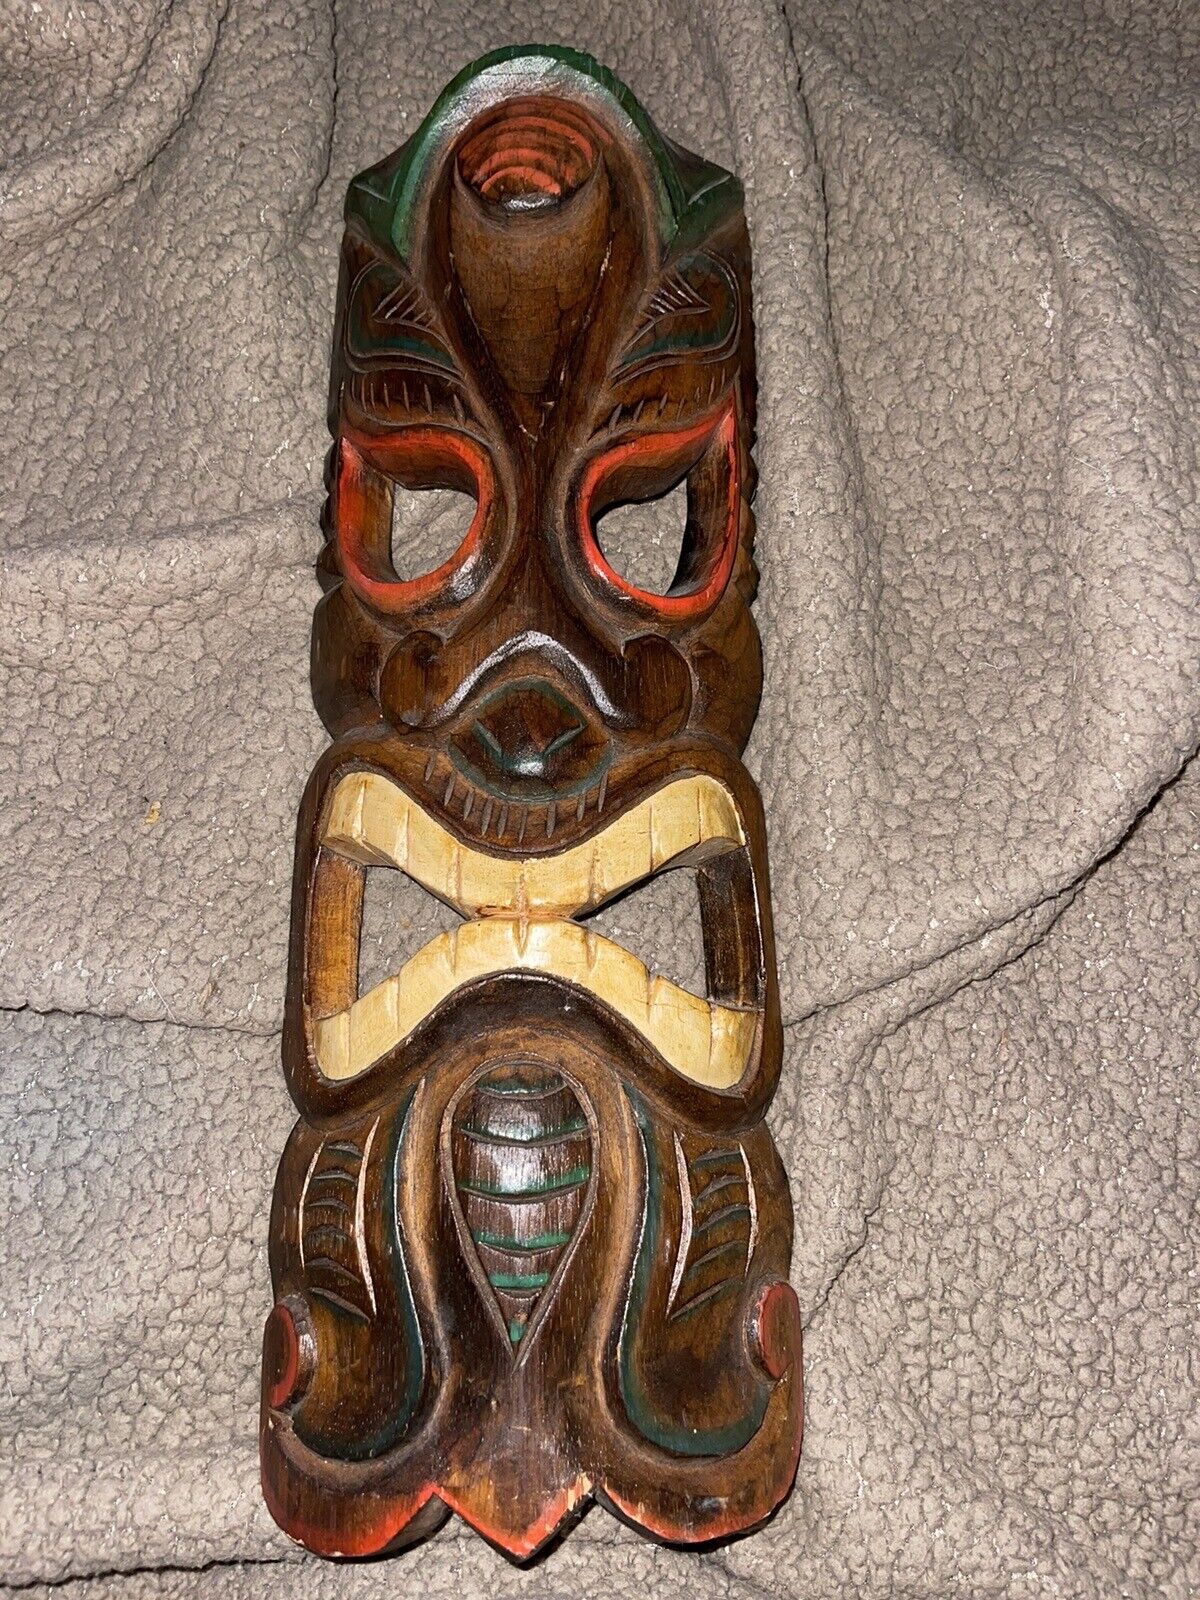 Hand Crafted Wooden Hawaiian Tiki Totem Wall Mask 19.5” Tall x 6” Wide